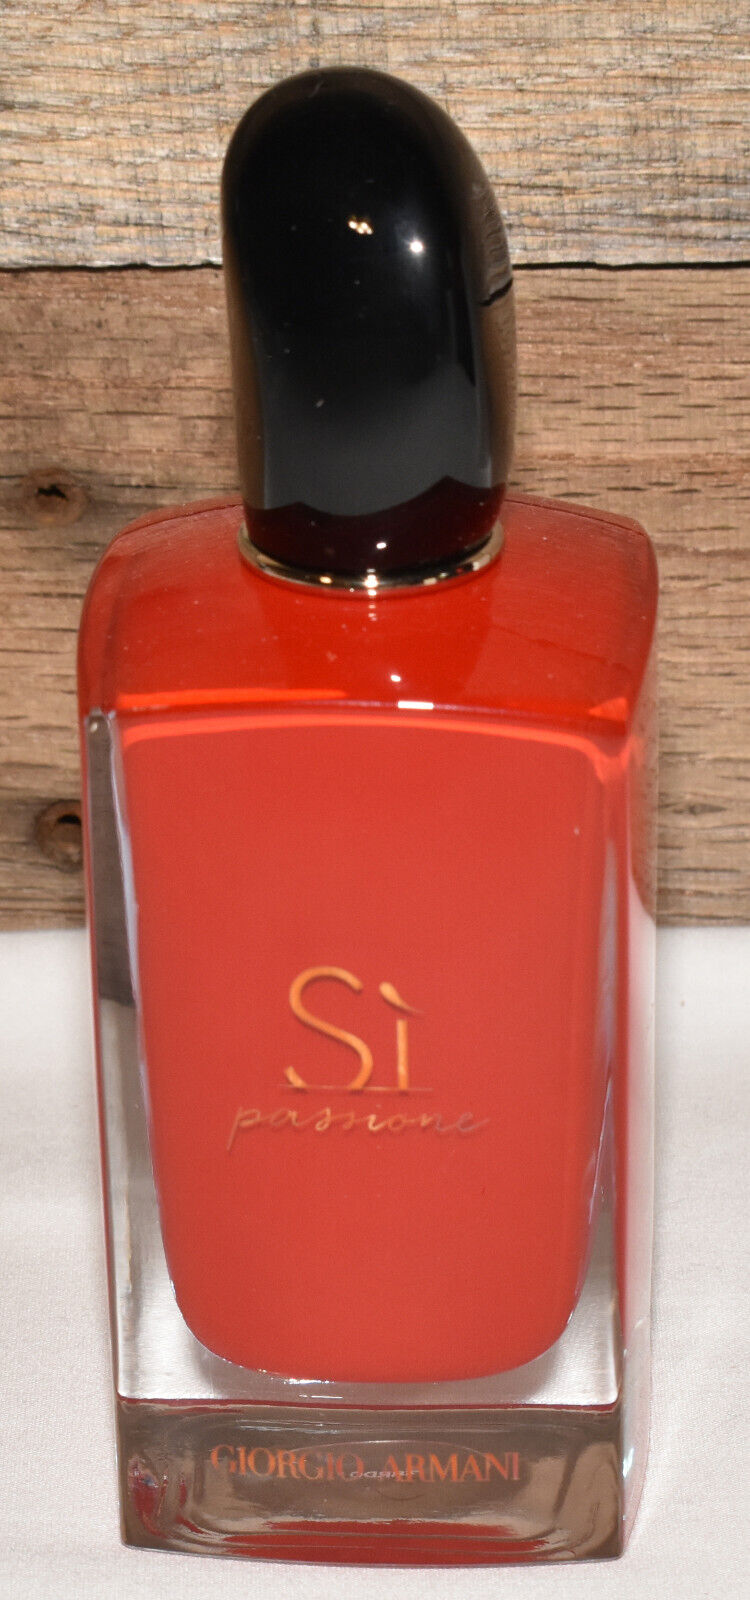 Giorgio Armani Si Passione Eau De Parfum Spray 100ml 3.4fl. oz. Womens Perfume